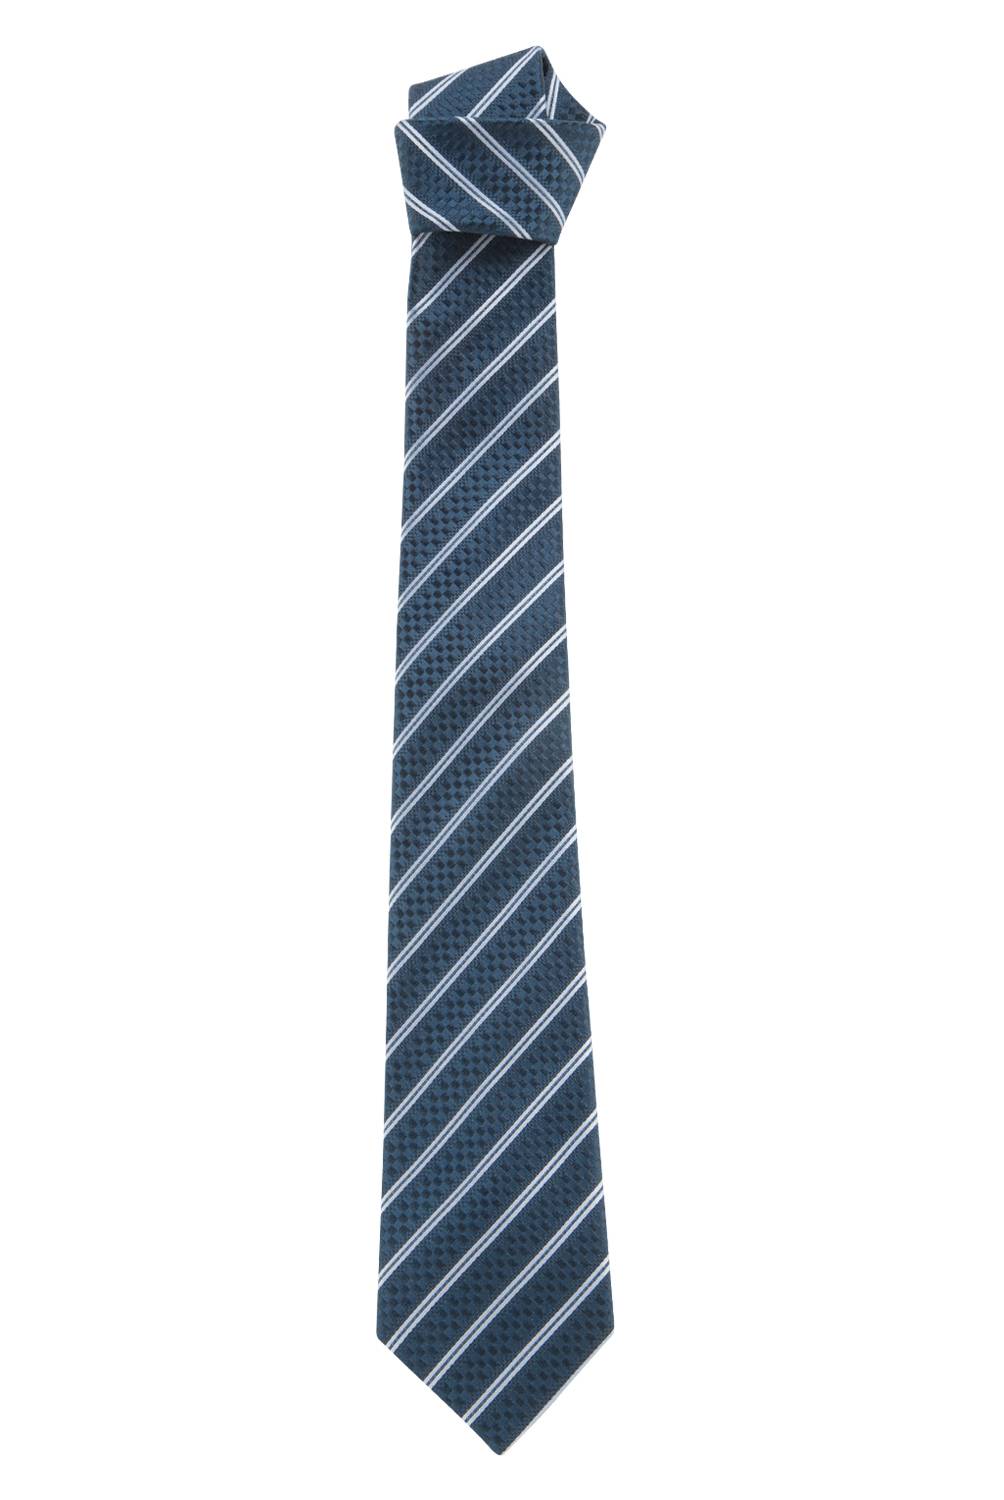 Vandine - Corbata Seda Fantasía Cuadros 7,5 cm